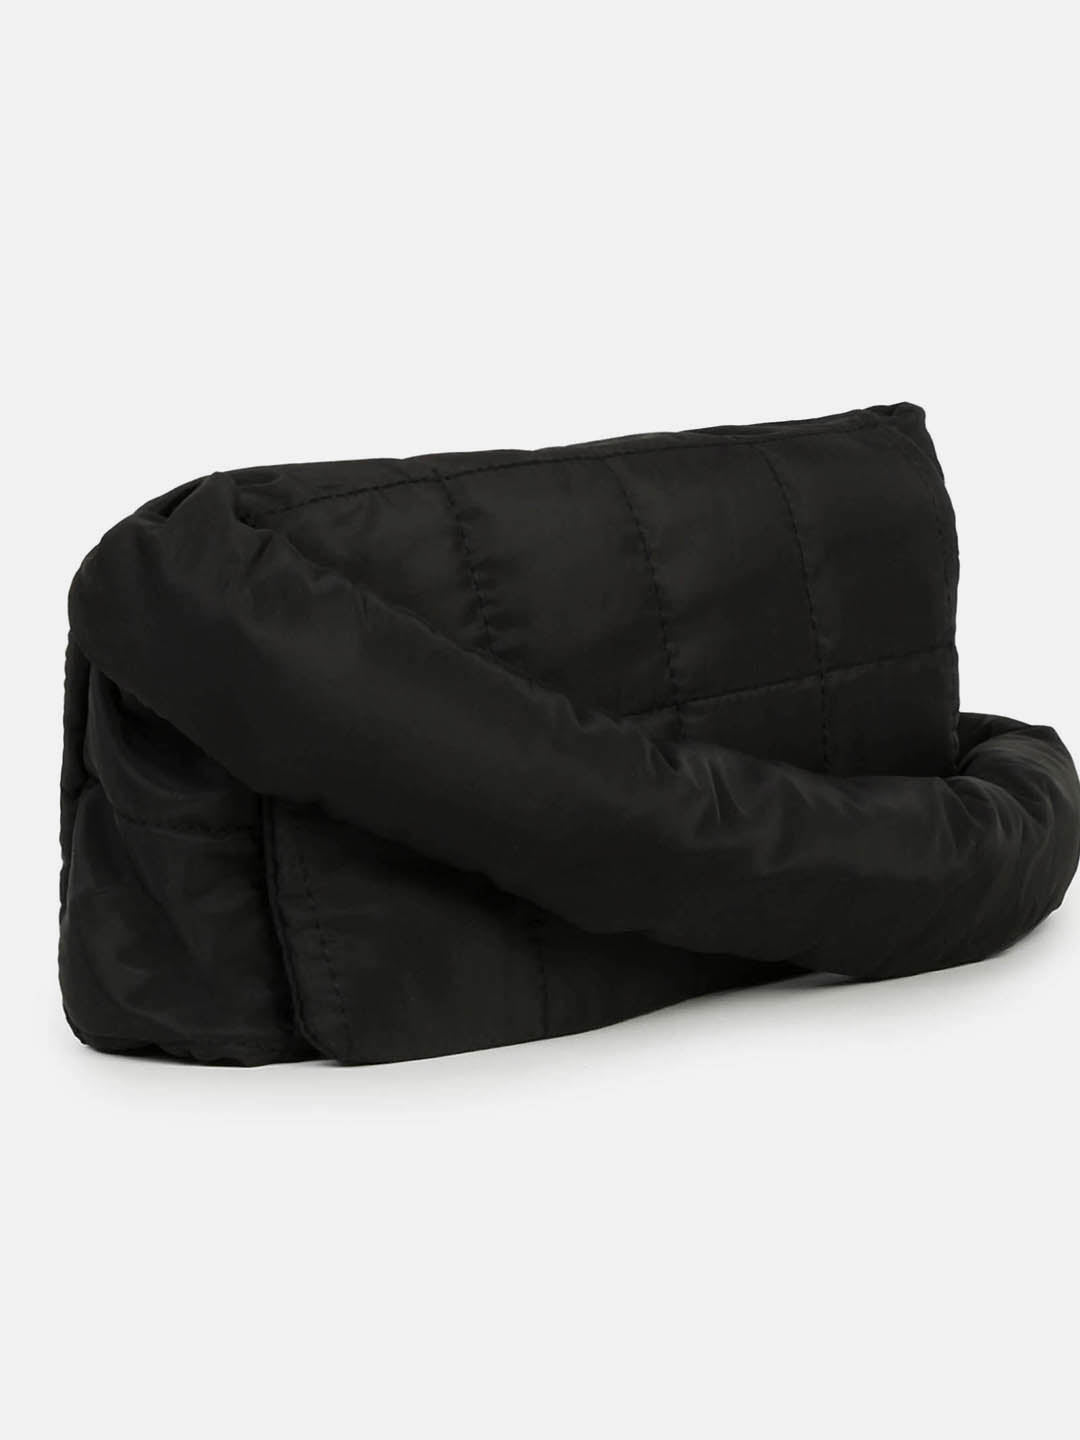 Charcoal Charm Black Handbag